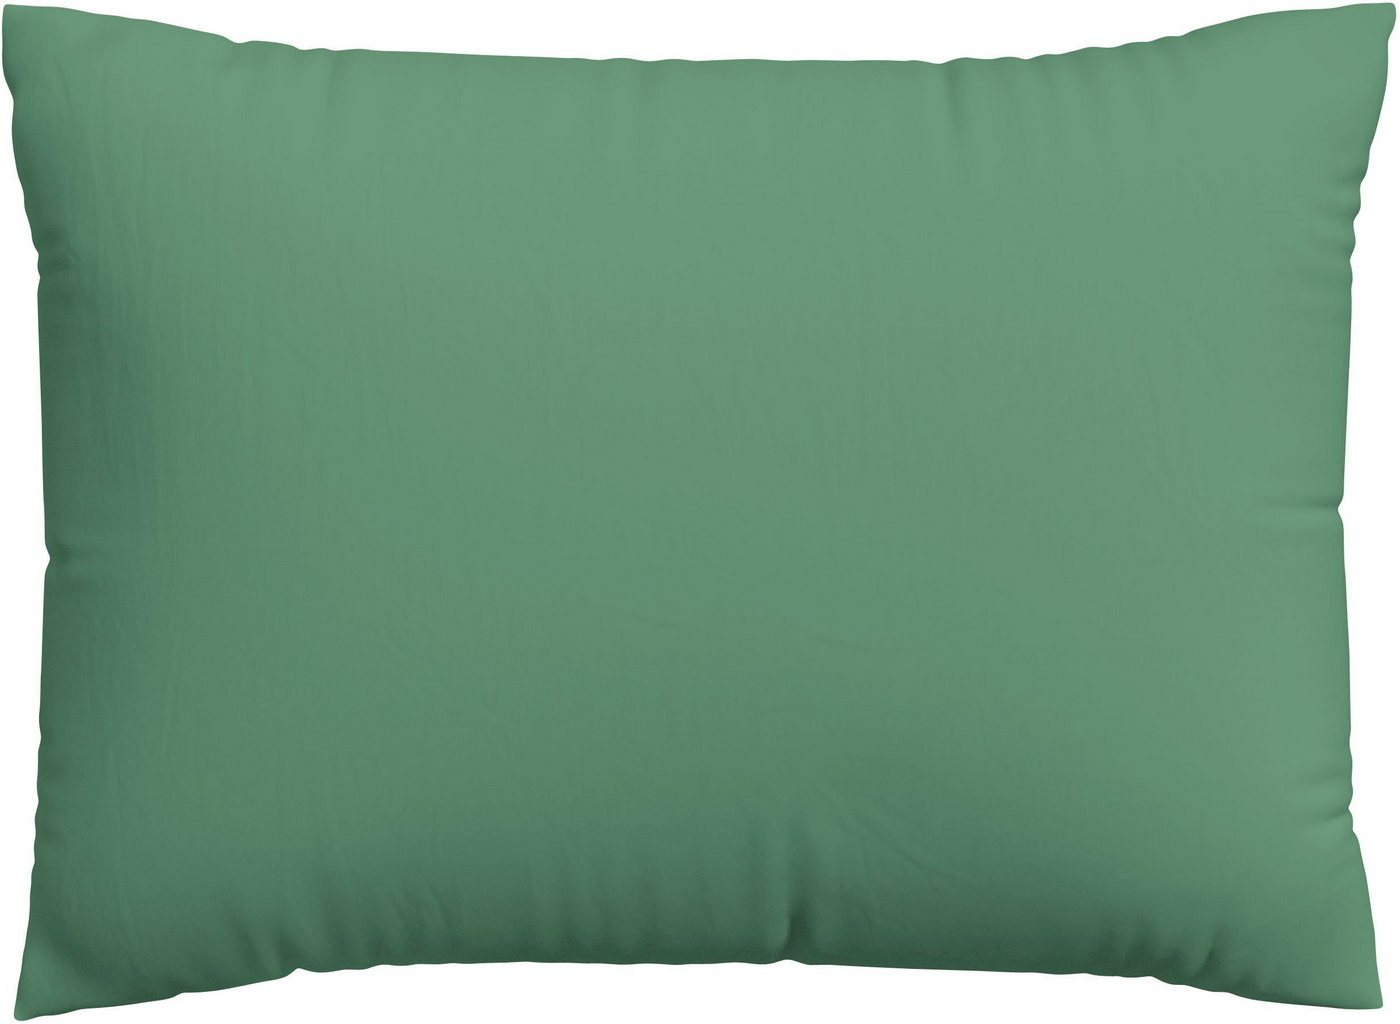 Kissenbezug Woven Satin aus Mako-Baumwolle, langlebig, pflegeleicht, dicht gewebt, Schlafgut (1 Stück), Kissenhülle mit Reißverschluss, passender Bettbezug erhältlich von Schlafgut